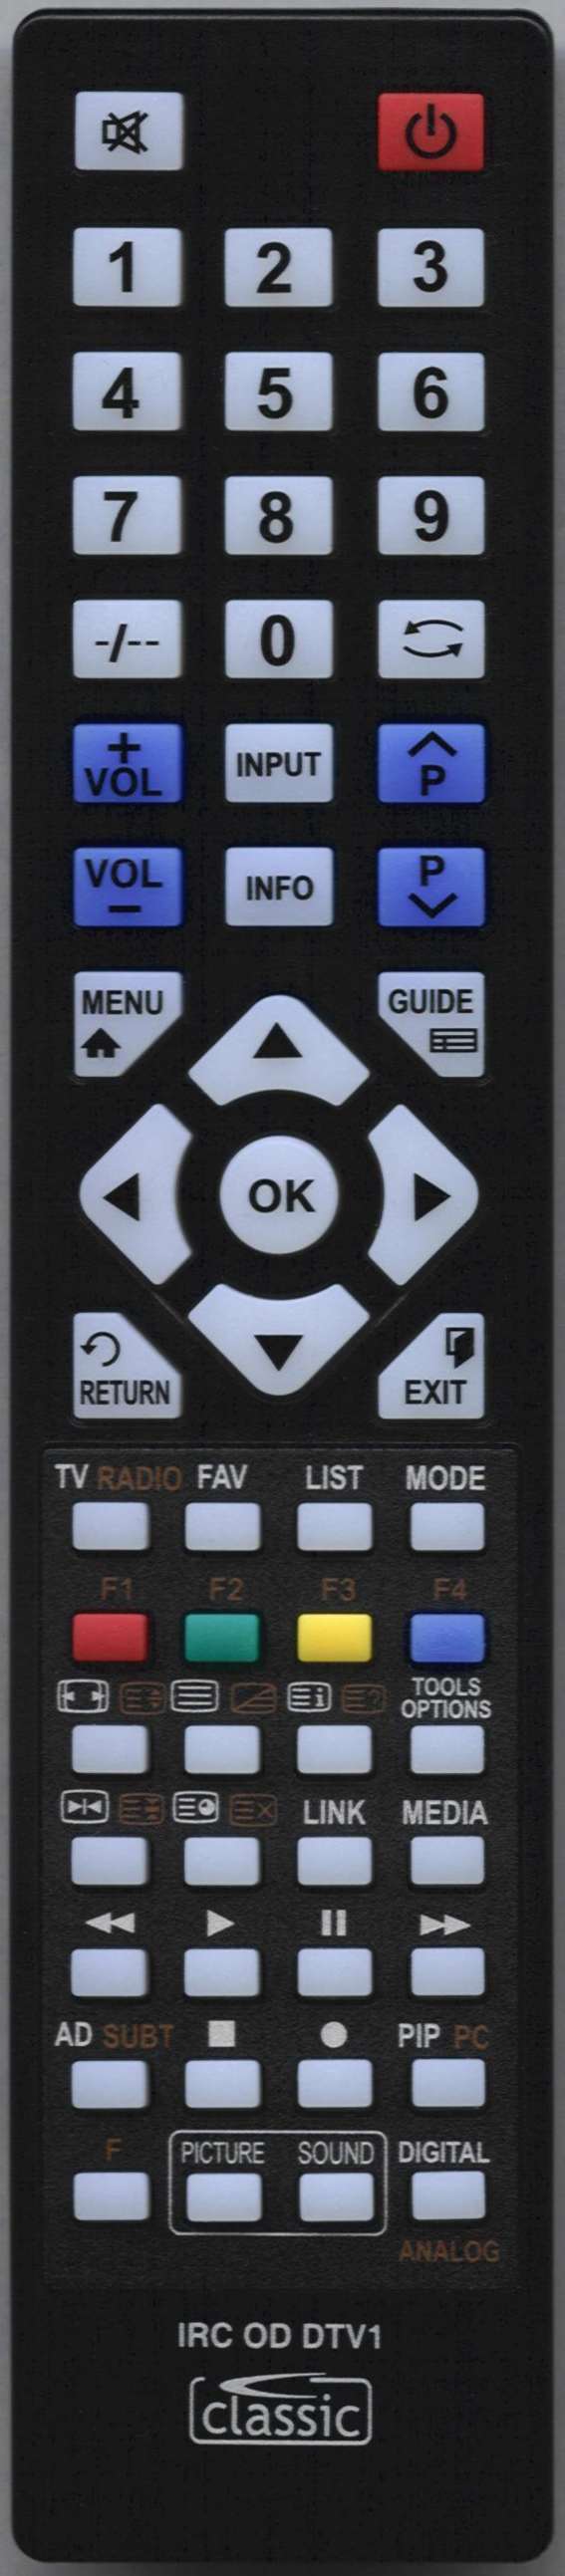 Beko 25411 TD Remote Control